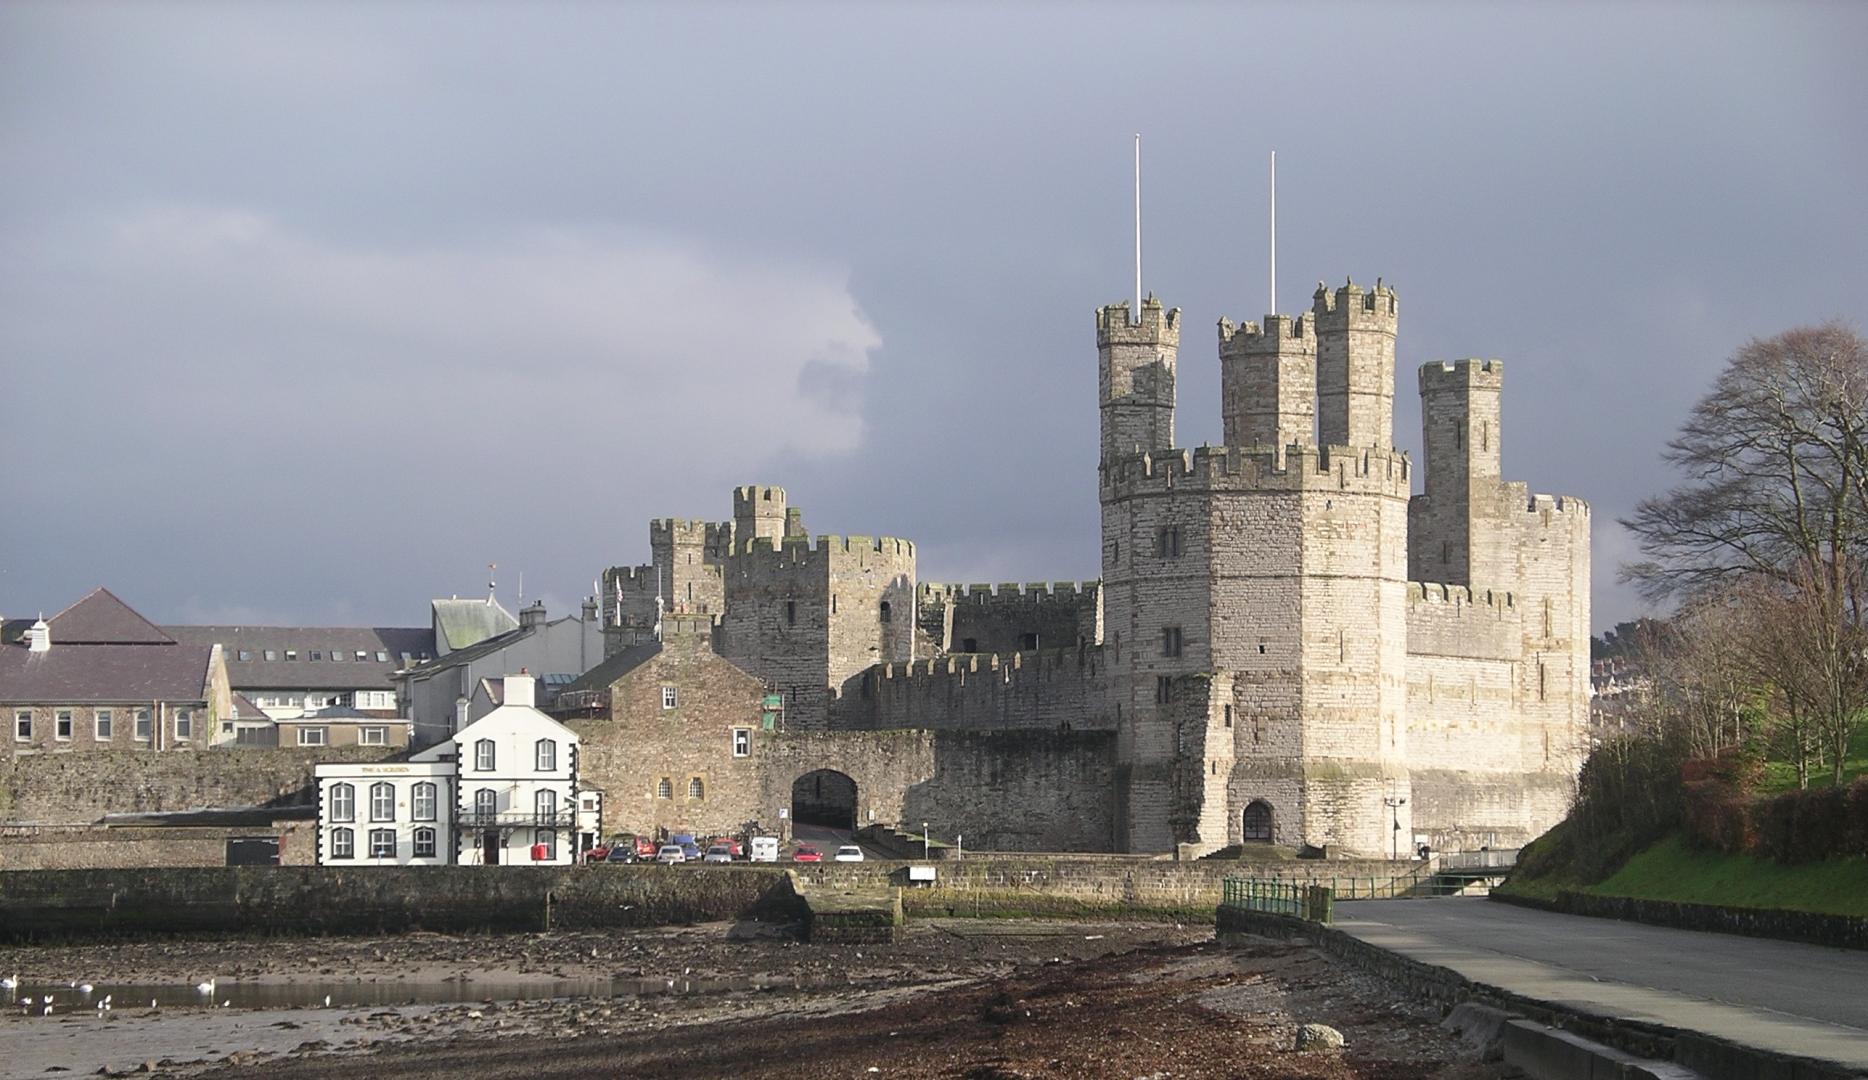 Caernarfon castle from the west